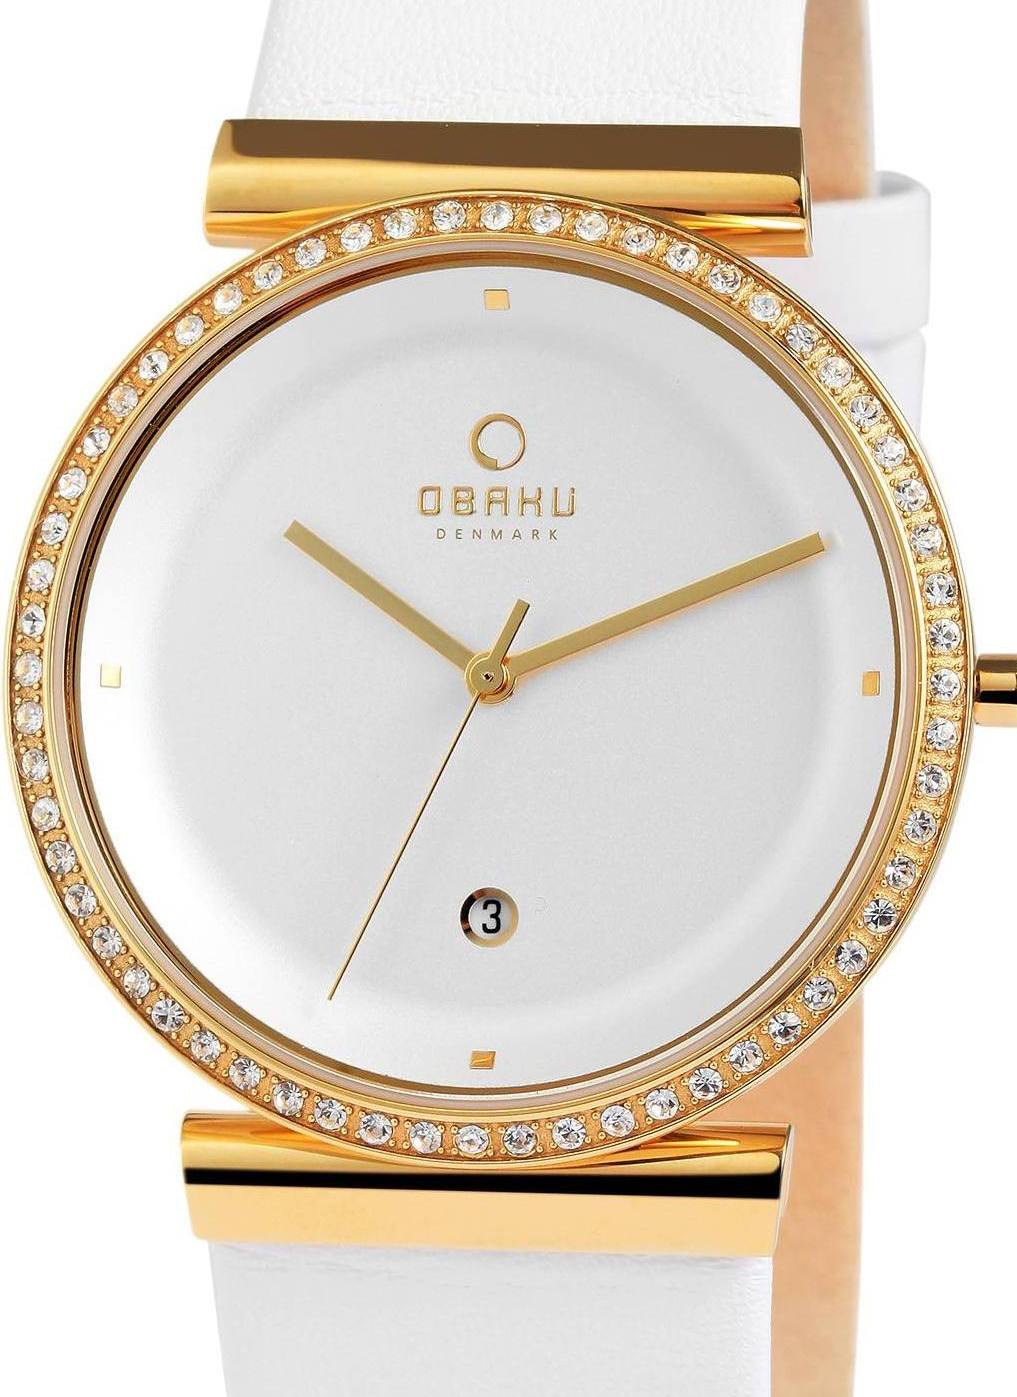 Authentic OBAKU Denmark Crystal Accented Ladies Watch